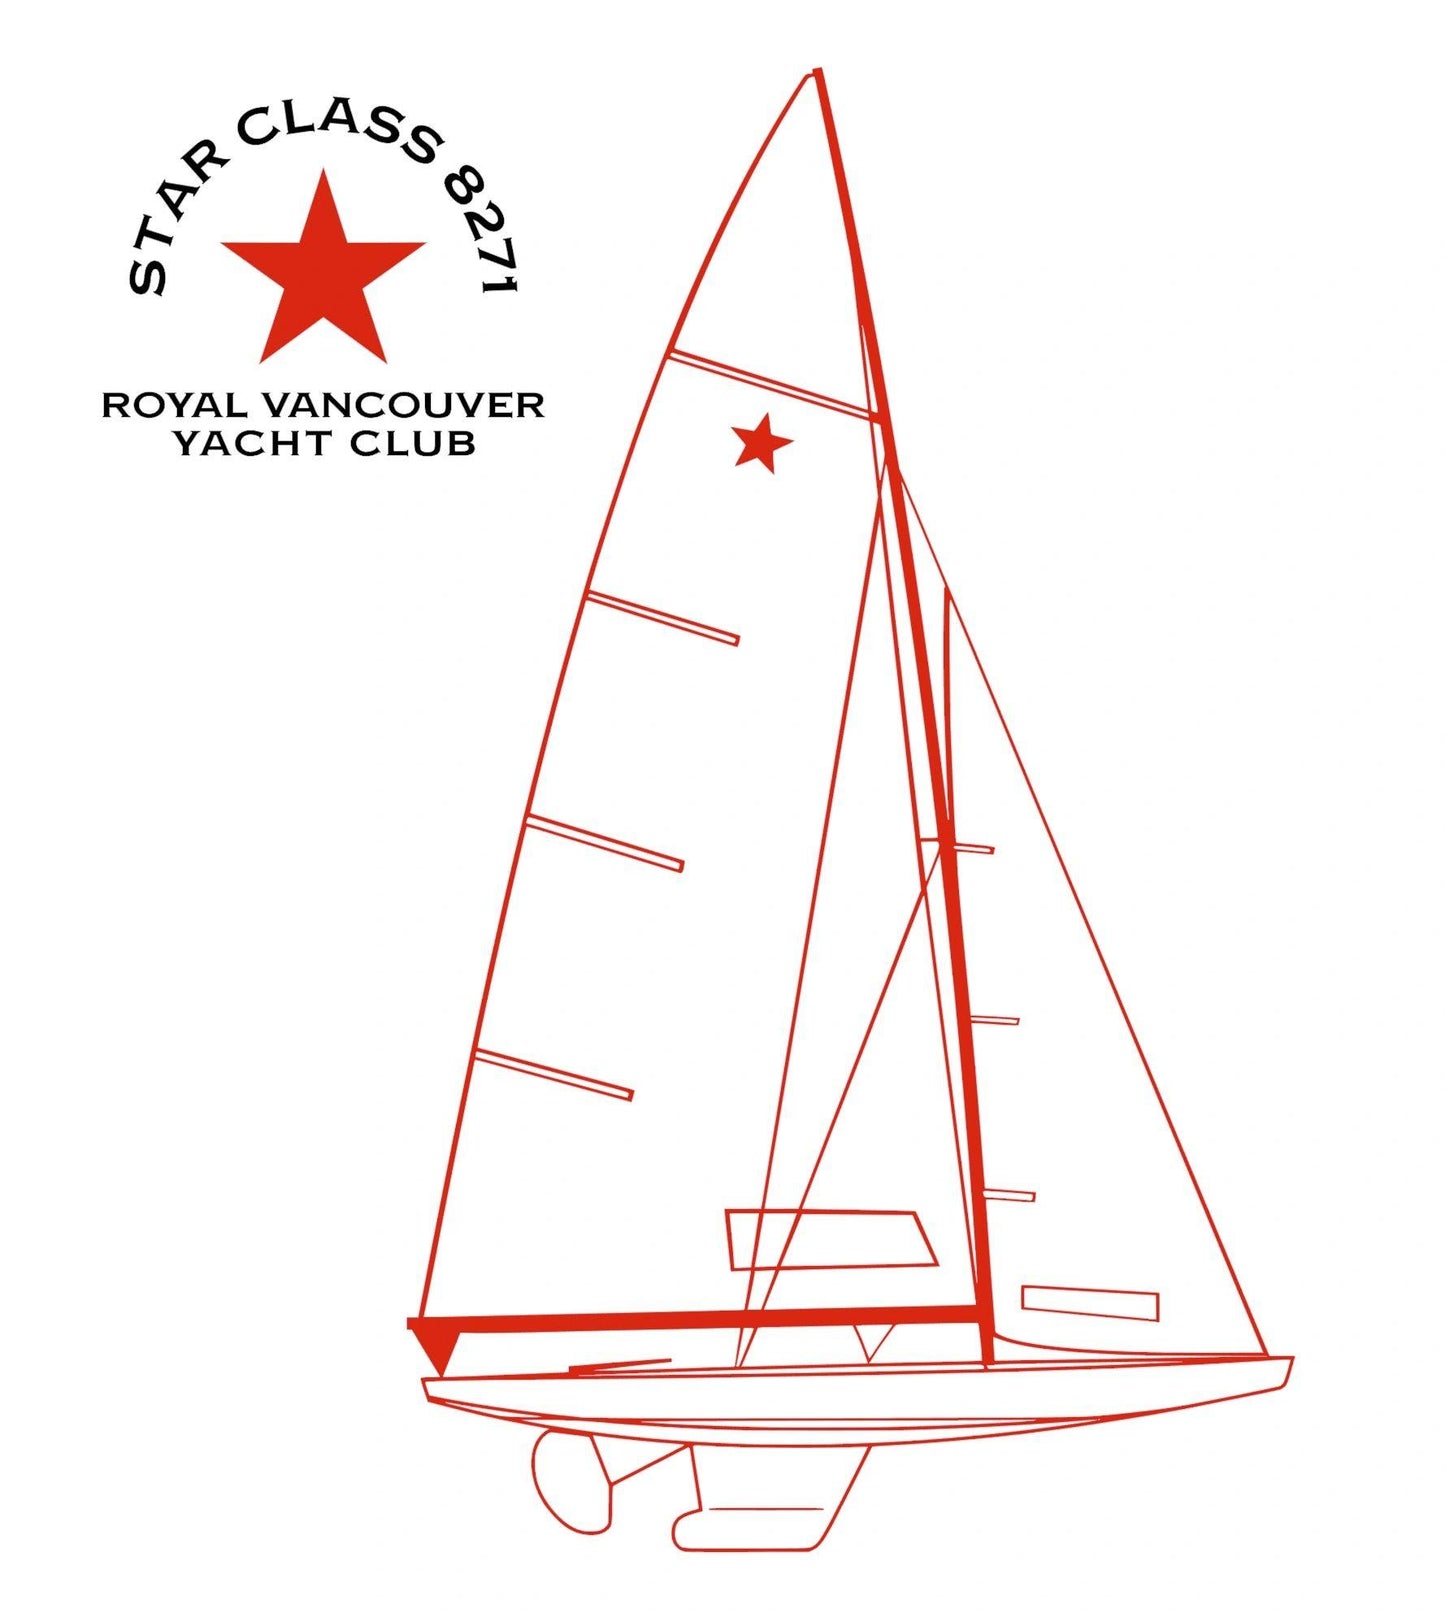 Star Class Performance Fabric Long Sleeve Boat Line Drawing Shirt